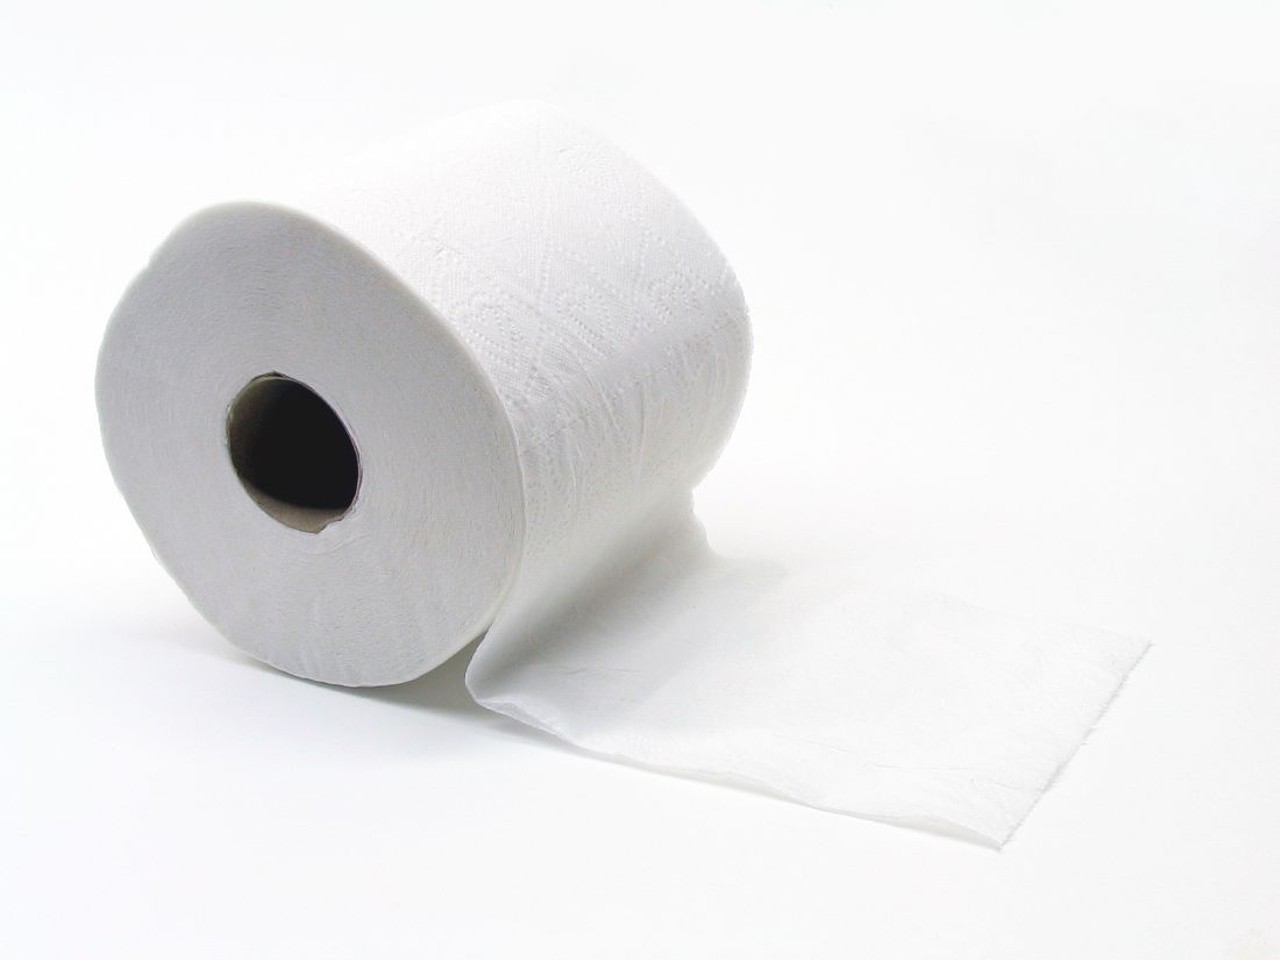 Stop Hoarding So Much Damn Toilet Paper 
Photo via Wikimedia Commons